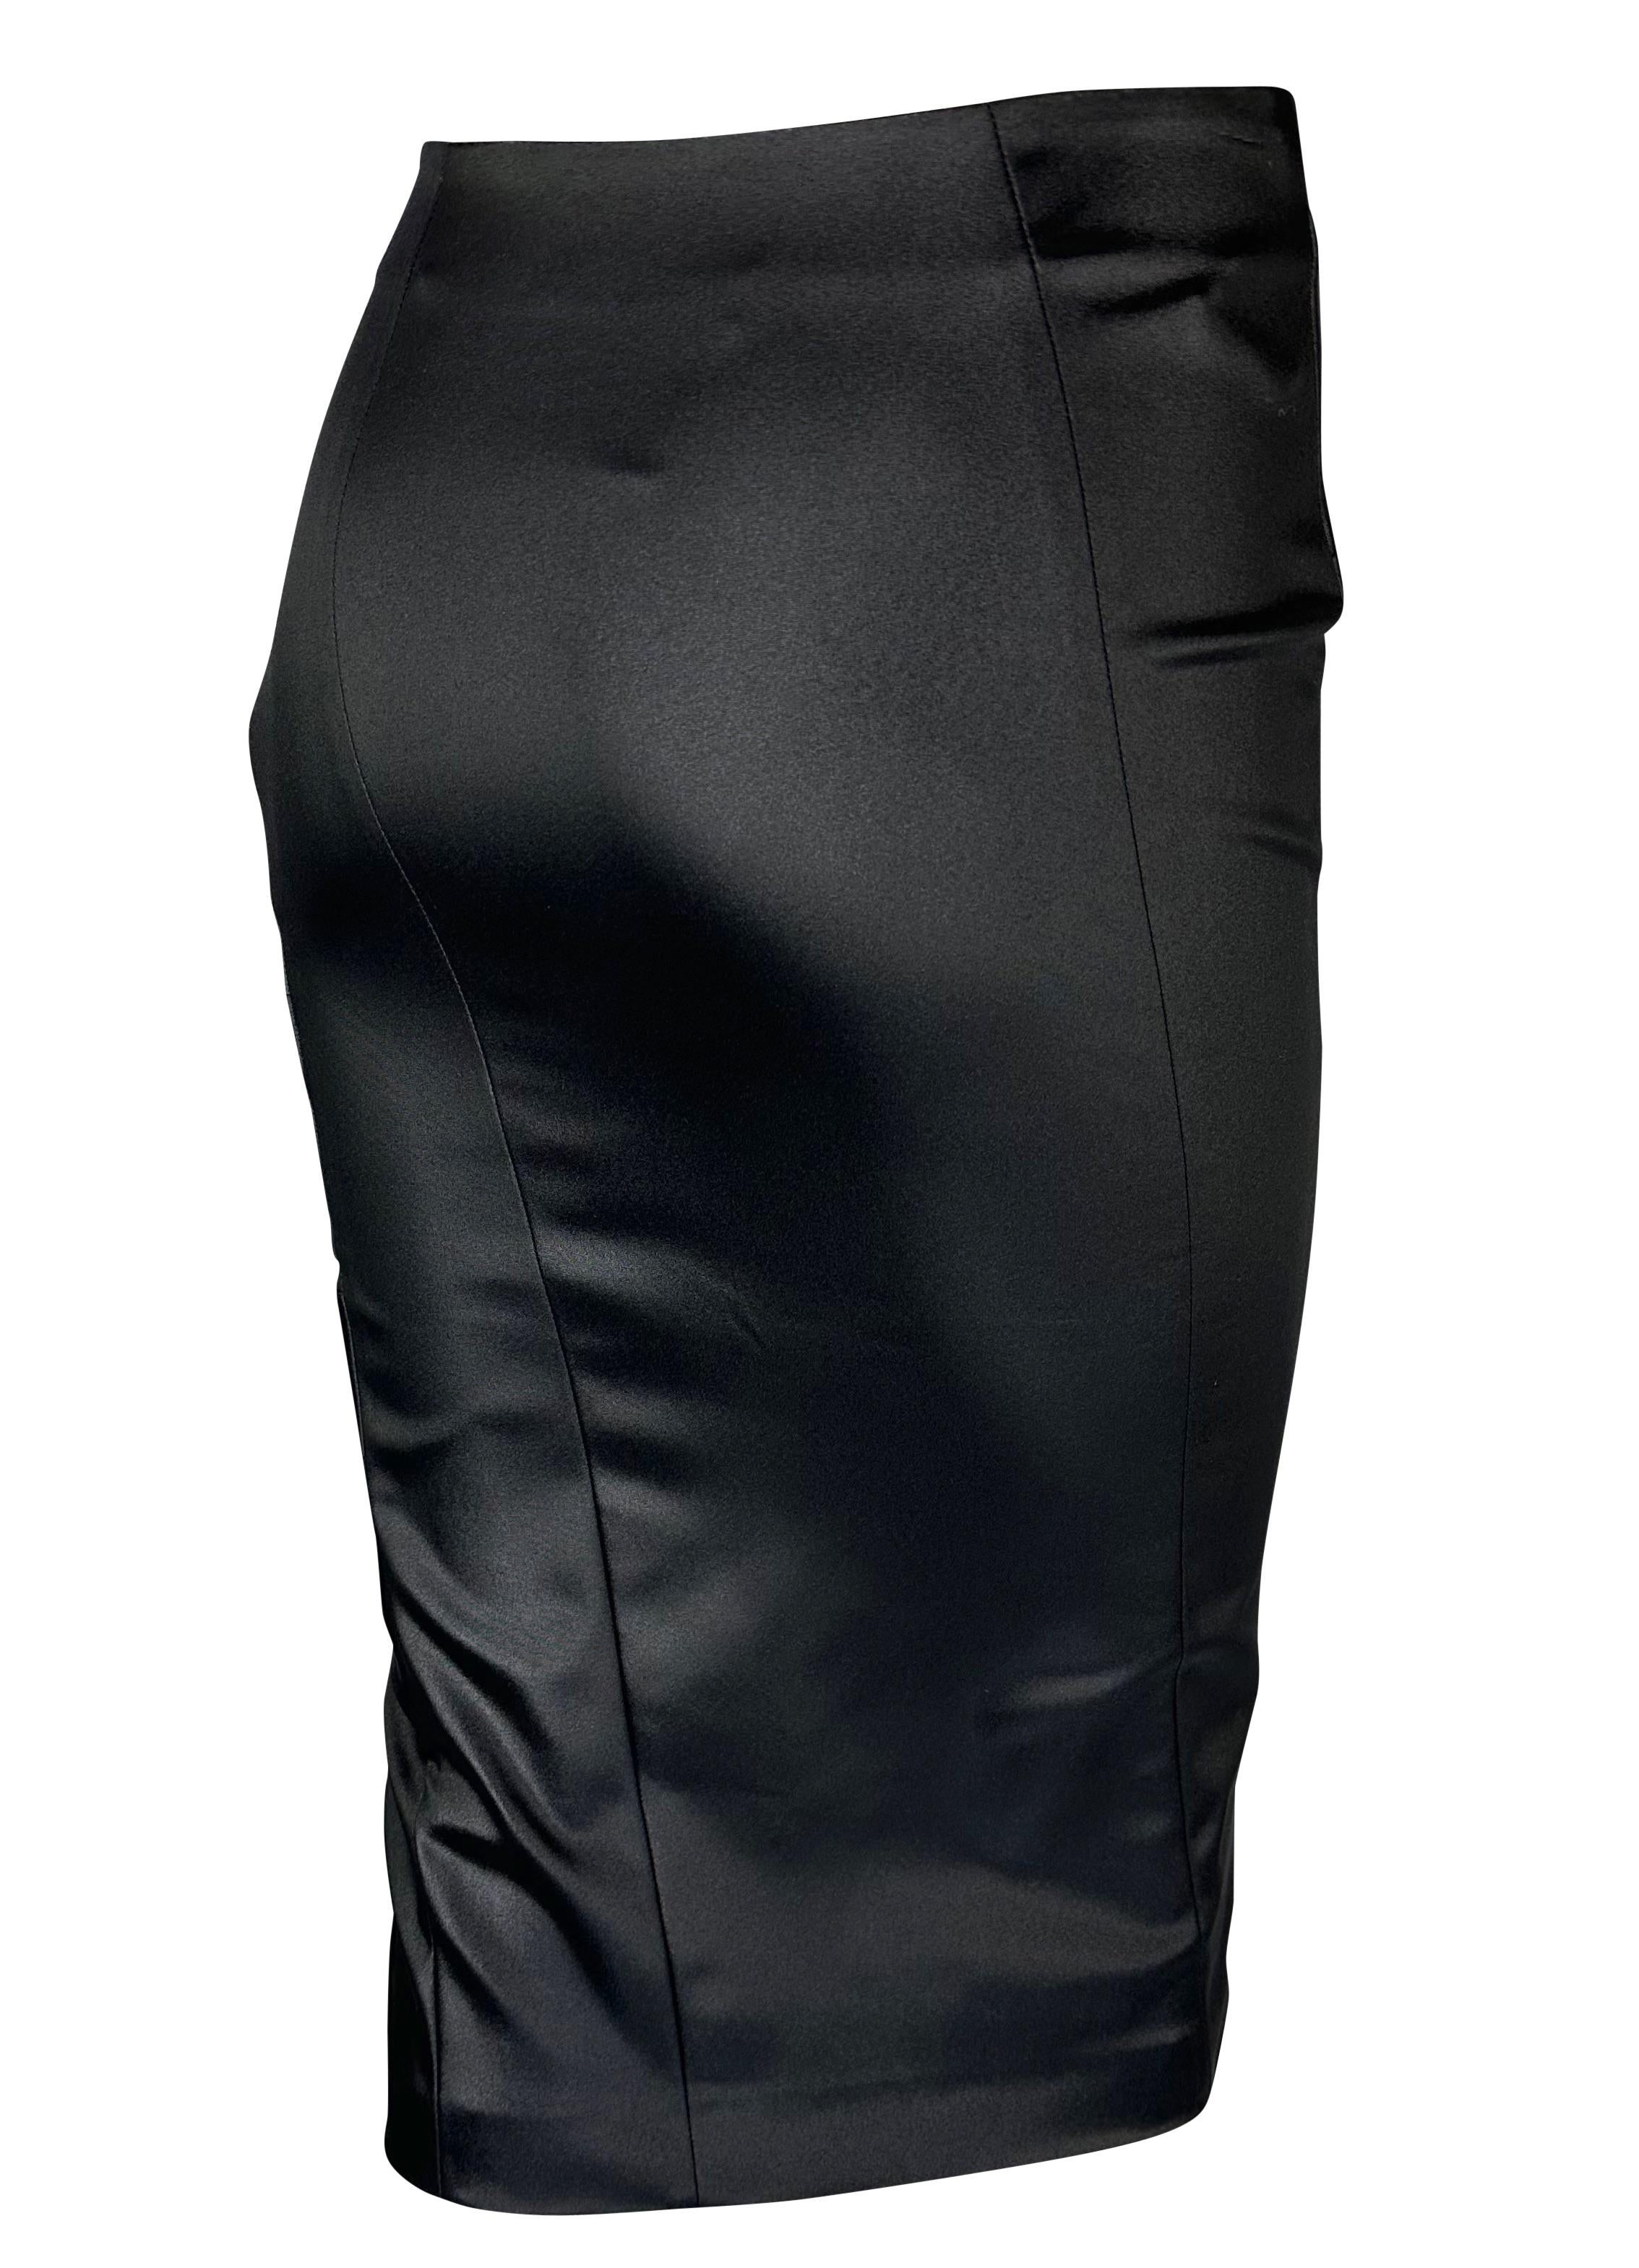 F/W 2003 Christian Dior by John Galliano for Tie Accenture Bodycon Stretch Skirt (jupe extensible avec nœud de cravate) en vente 2